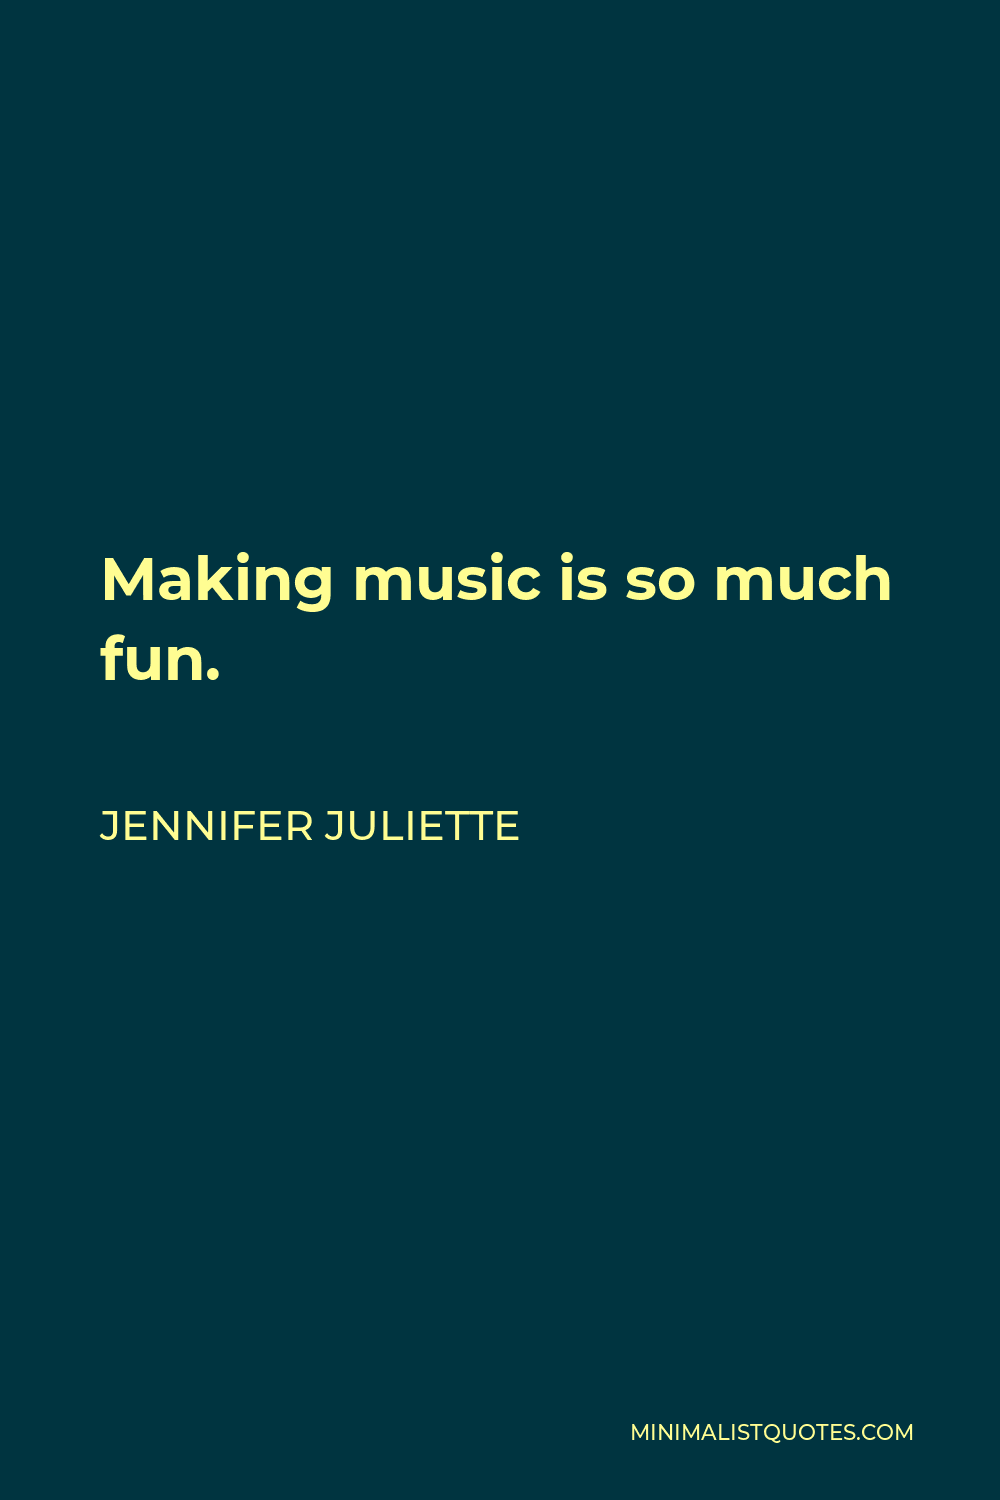 Jennifer Juliette Quote - Making music is so much fun.